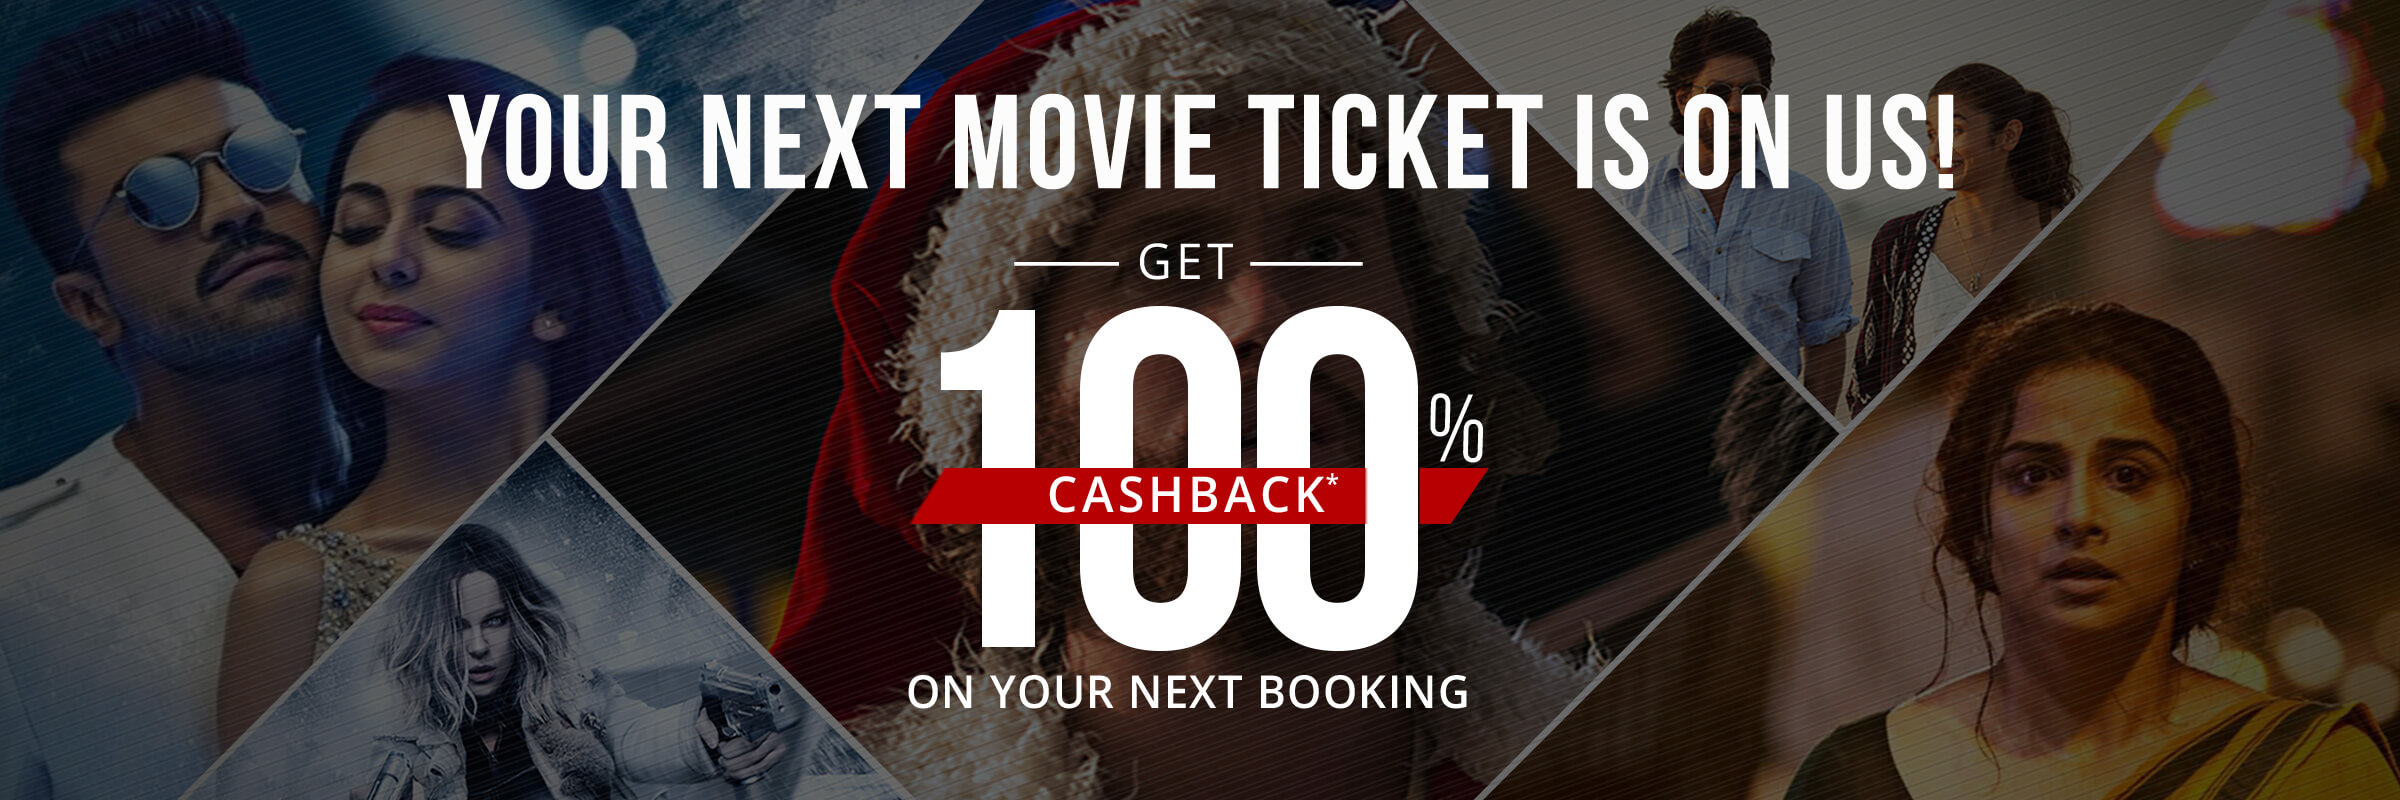 Paytm: Get 100% Cashback on Next Movie Ticket Purchase (Upto Rs.300)